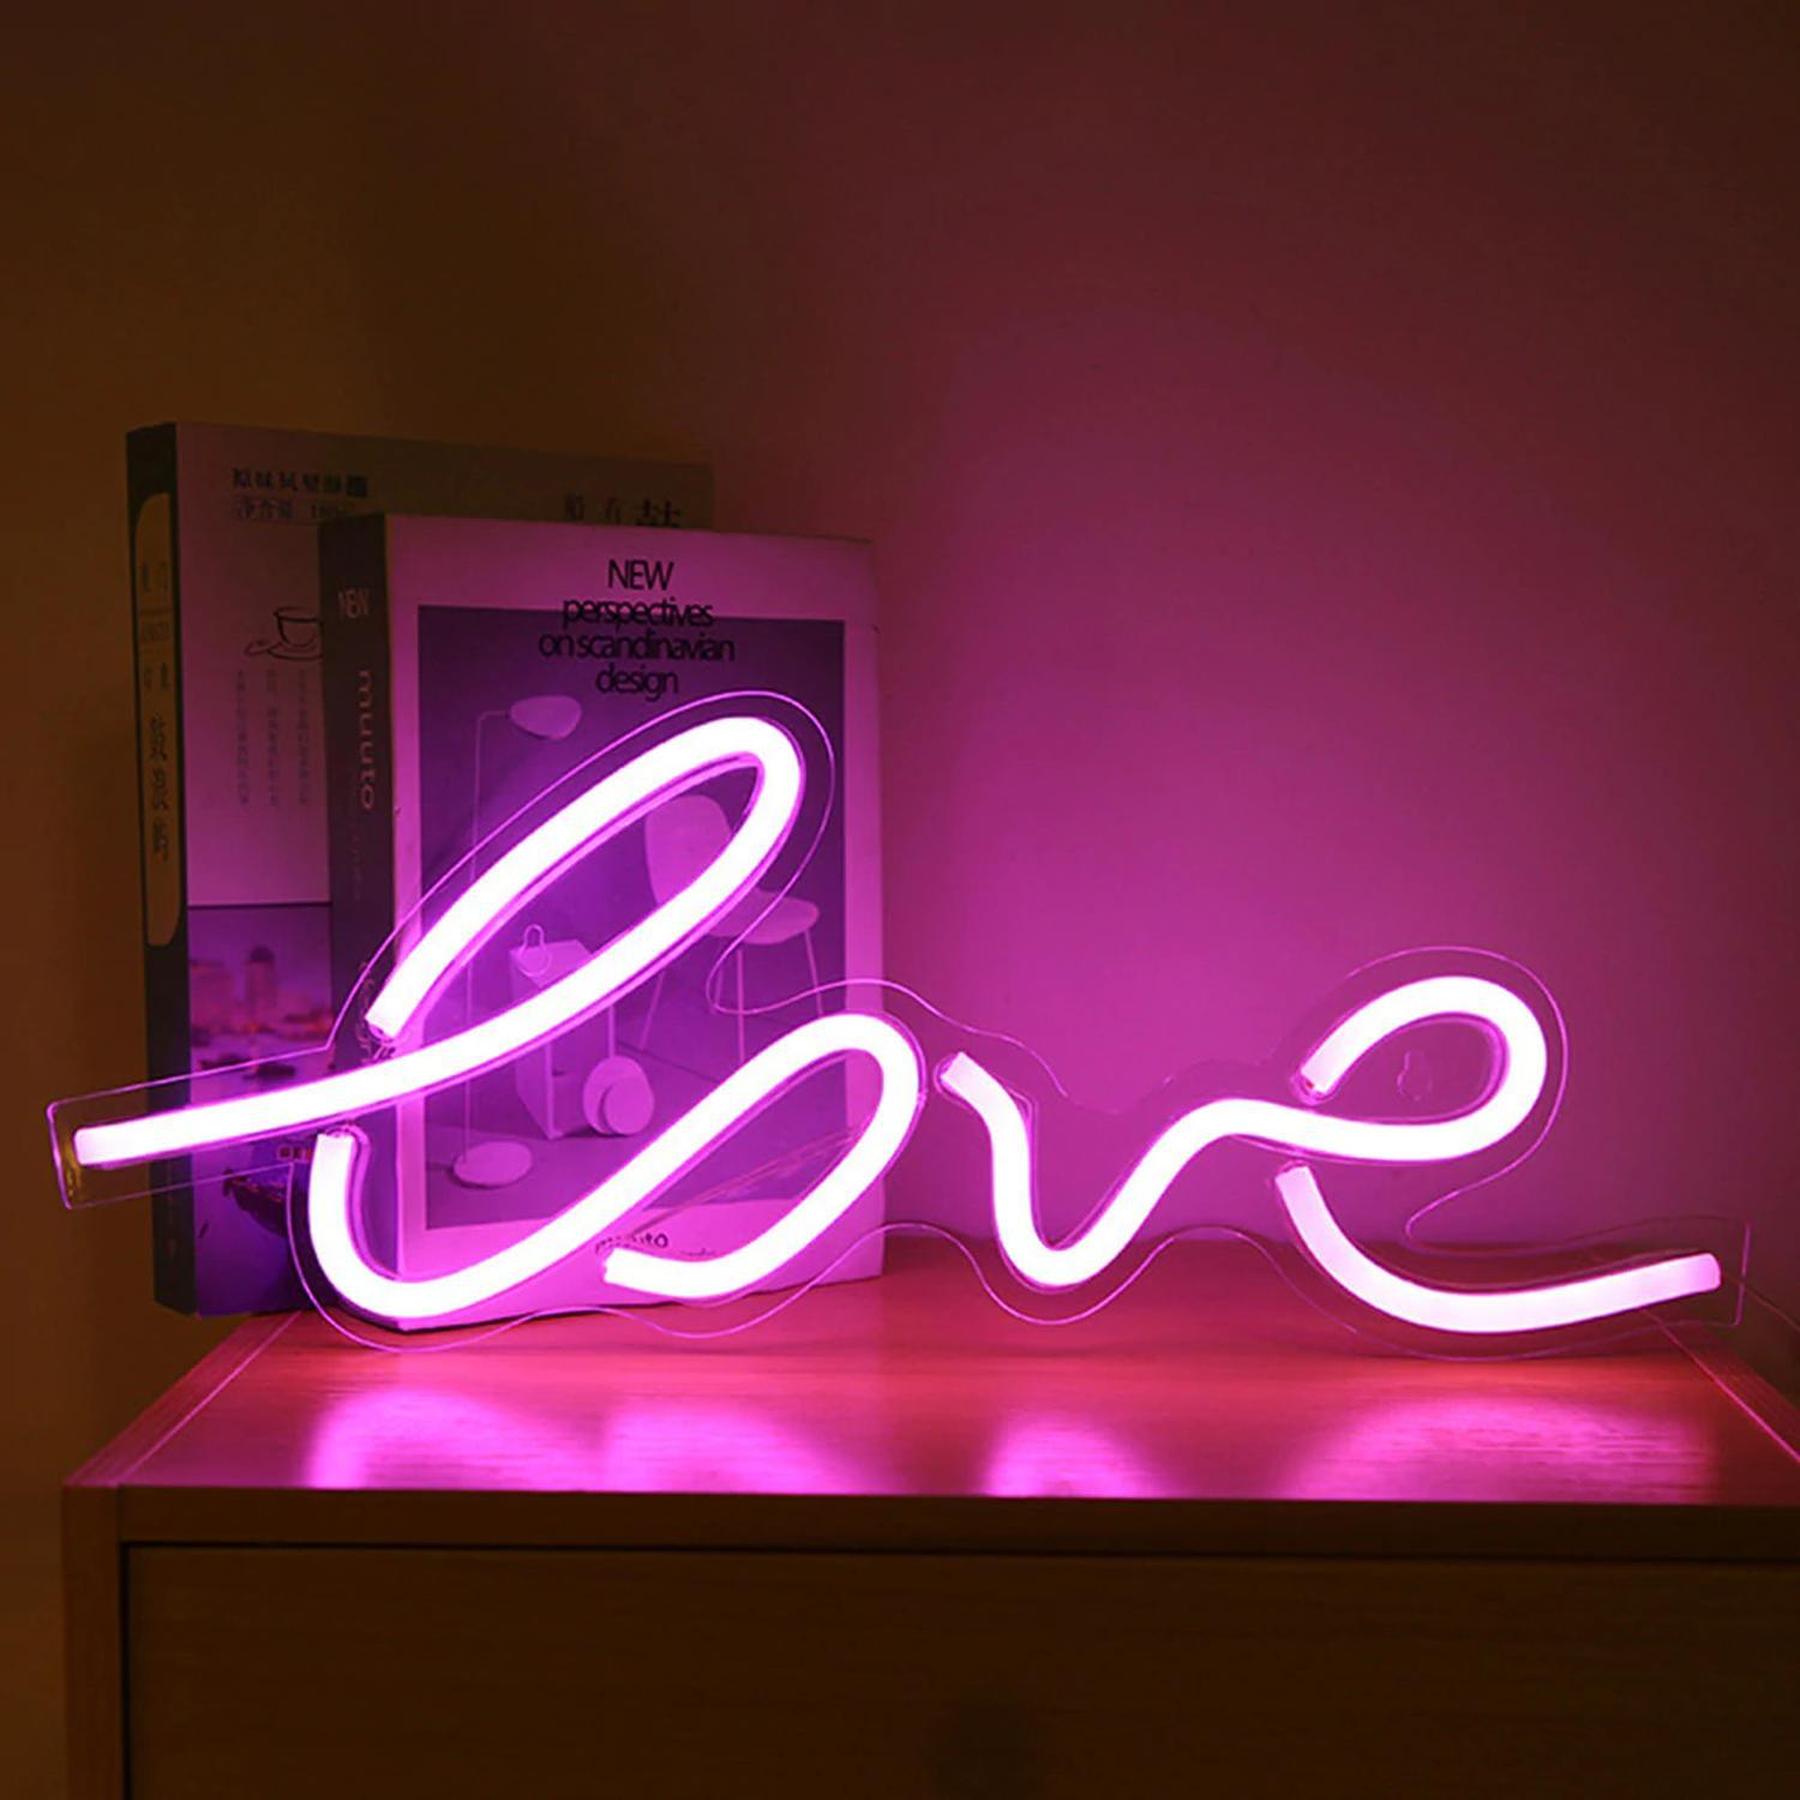 NEON LED Licht, dekorative Wand-Leuchte, Love Schriftzug pink, ca